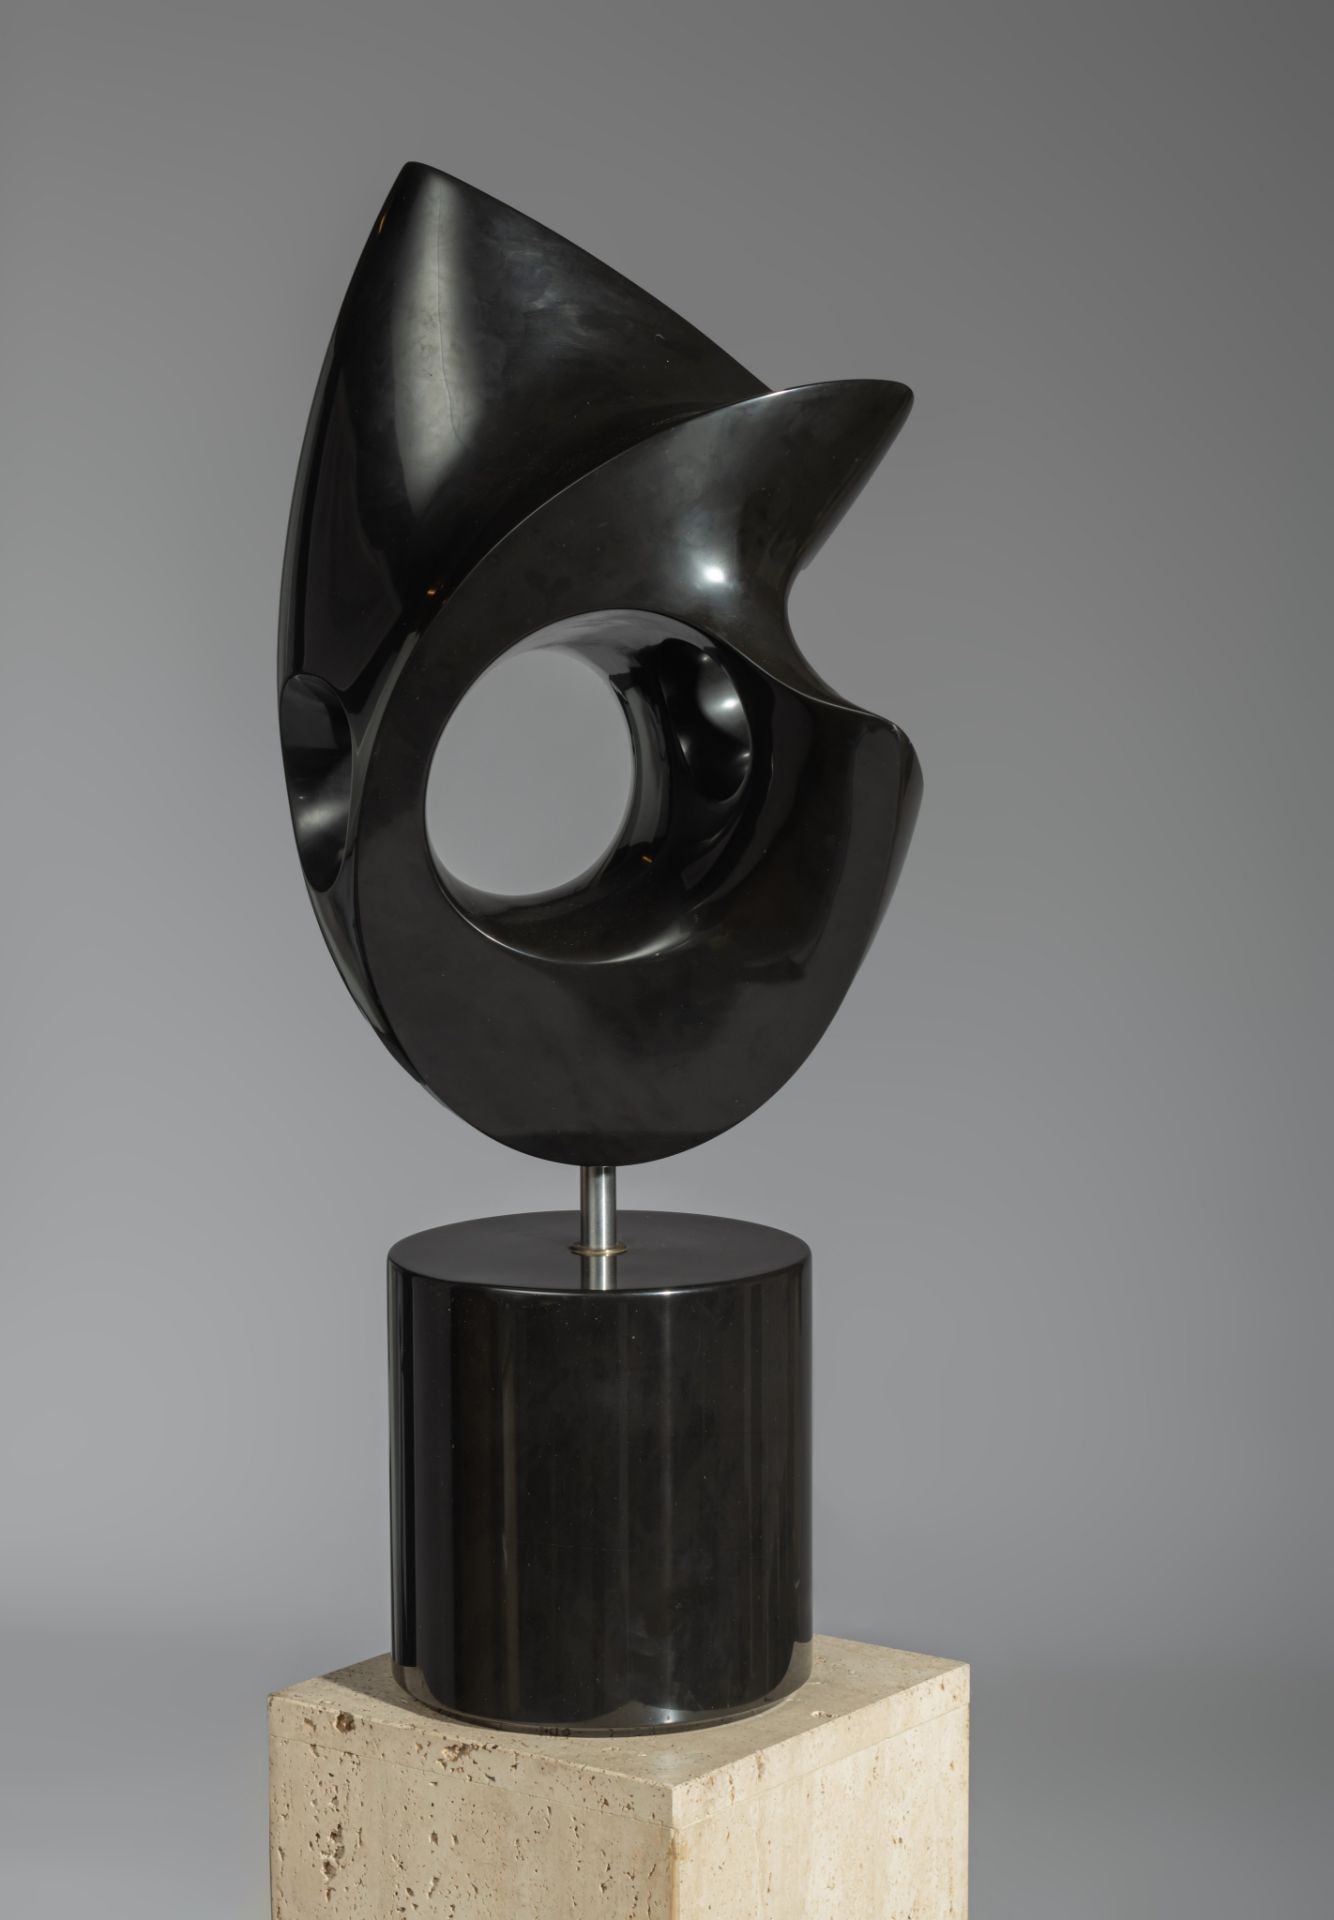 Jeanine Behaeghel (1940-1993), abstract sculpture, 1988, noir Belge marble on a travertine pedestal, - Image 3 of 18